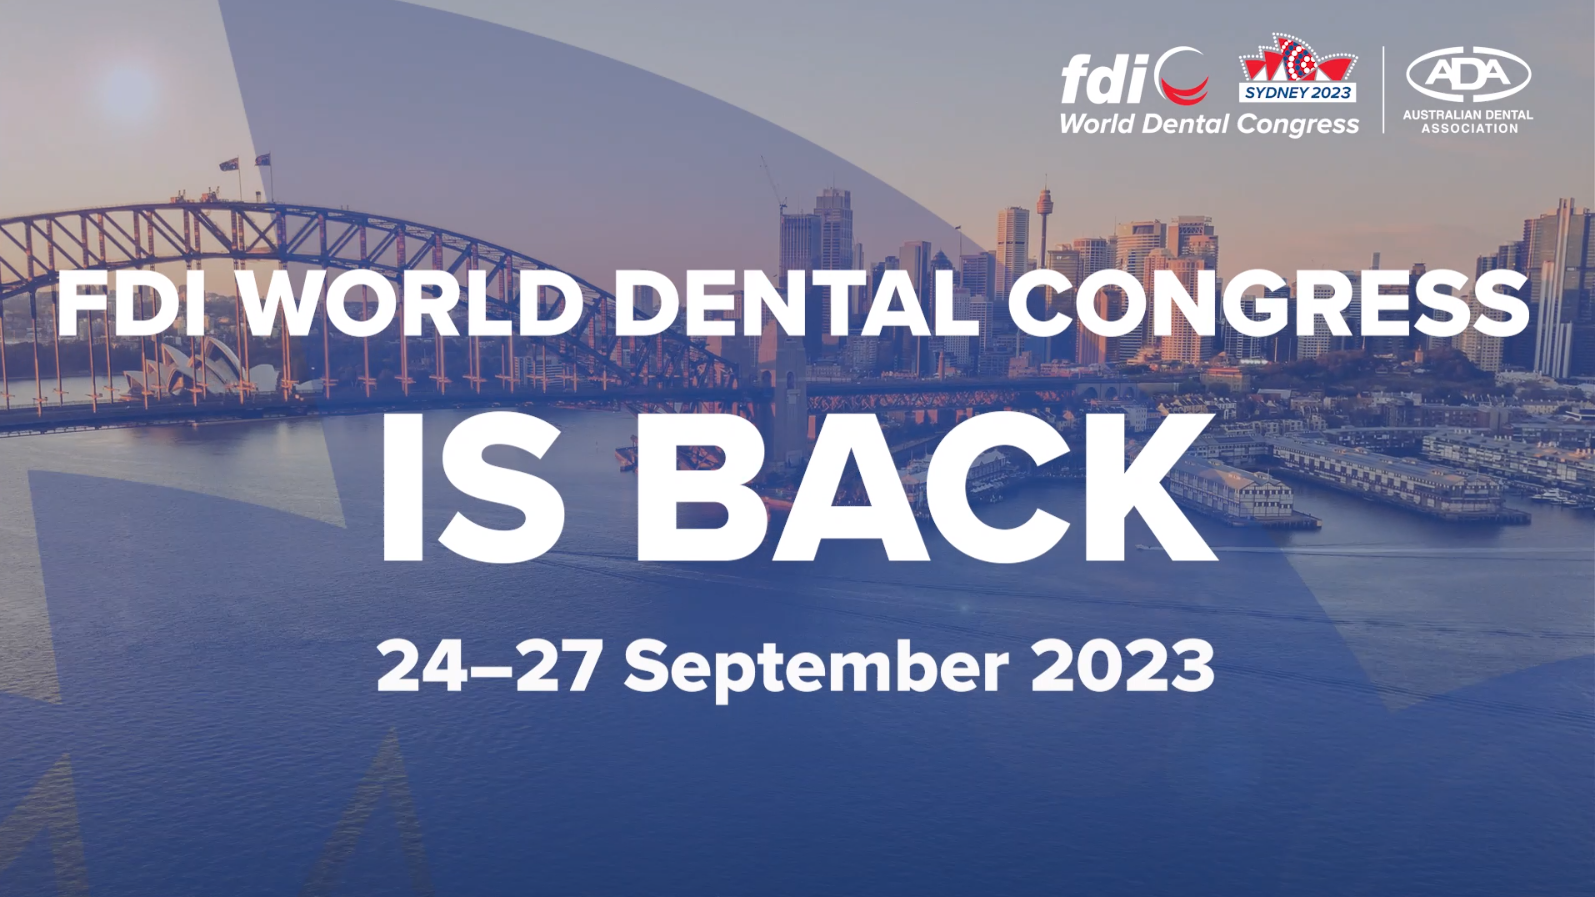 Australia acogerá el Congreso Dental Mundial de la FDI de 2023